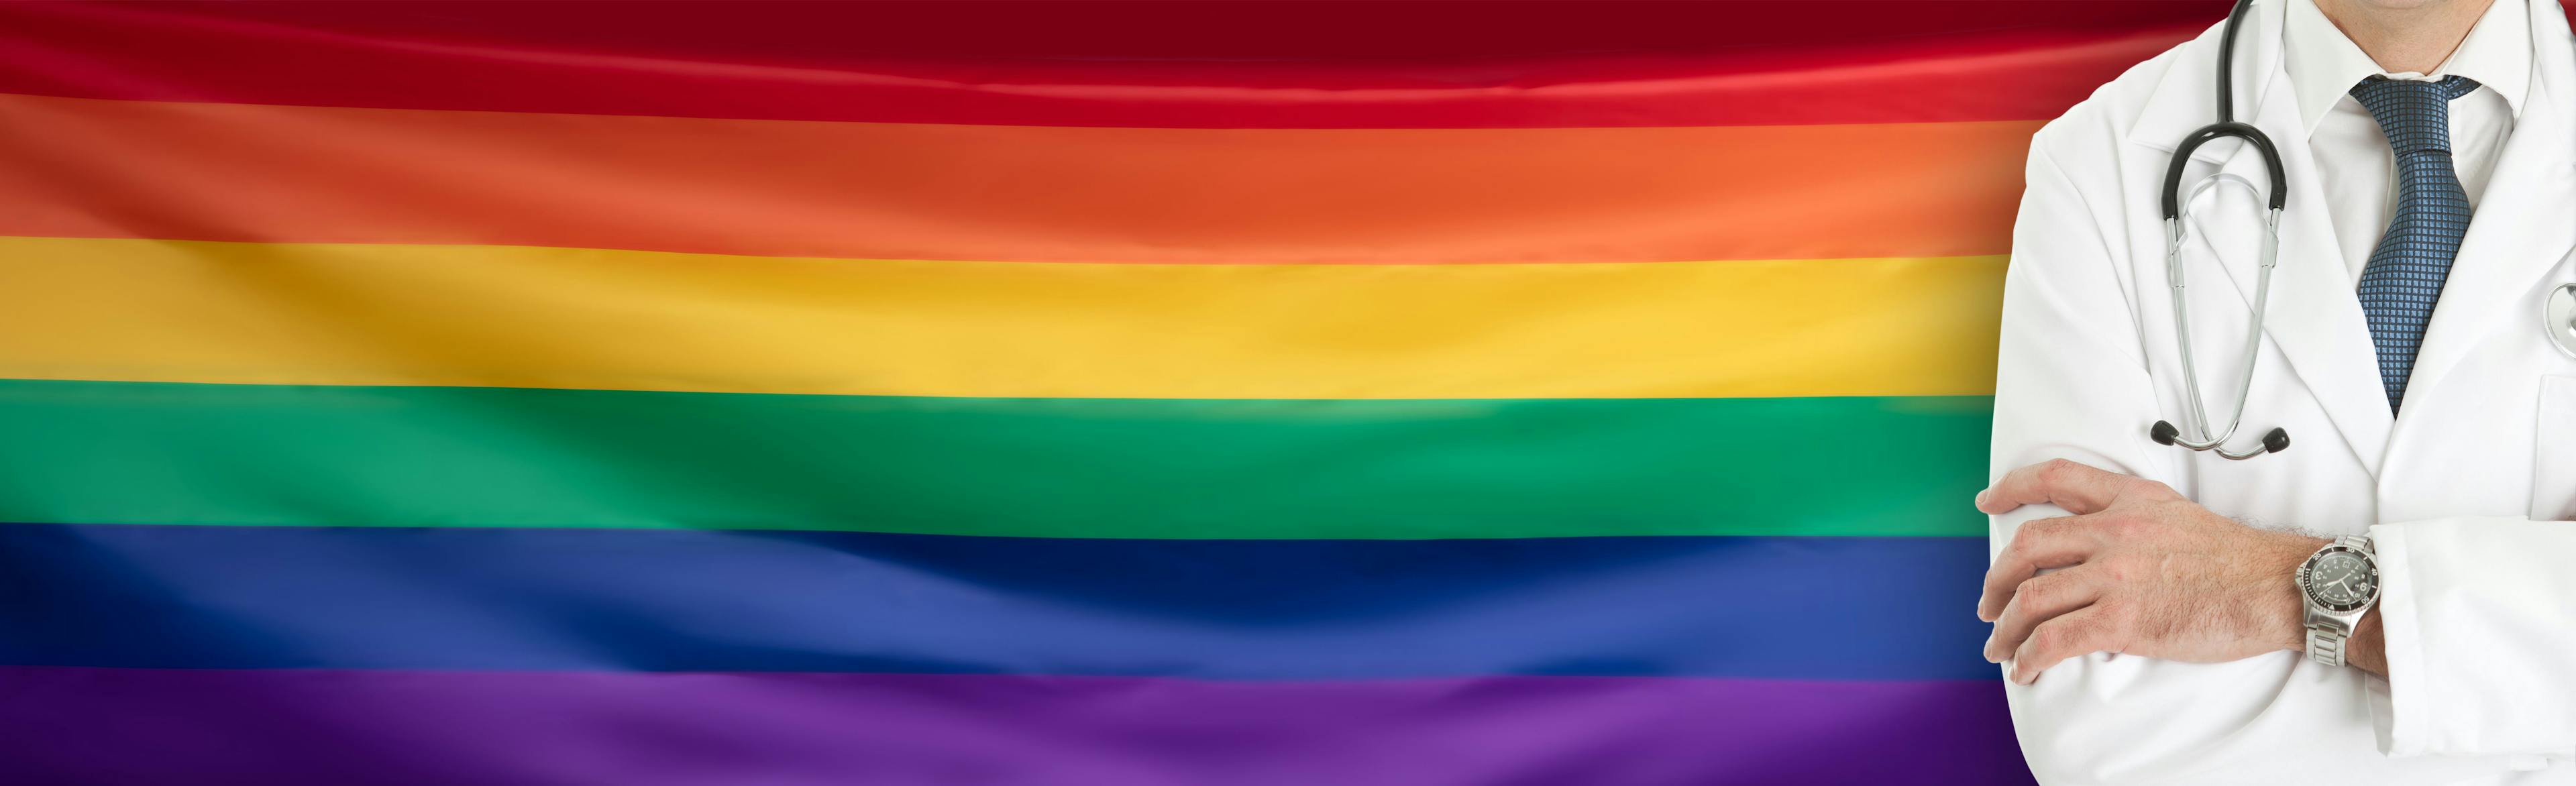 Doctor w LGBTQ rainbow flag | Image credit: © Syda Productions  stock.adobe.com